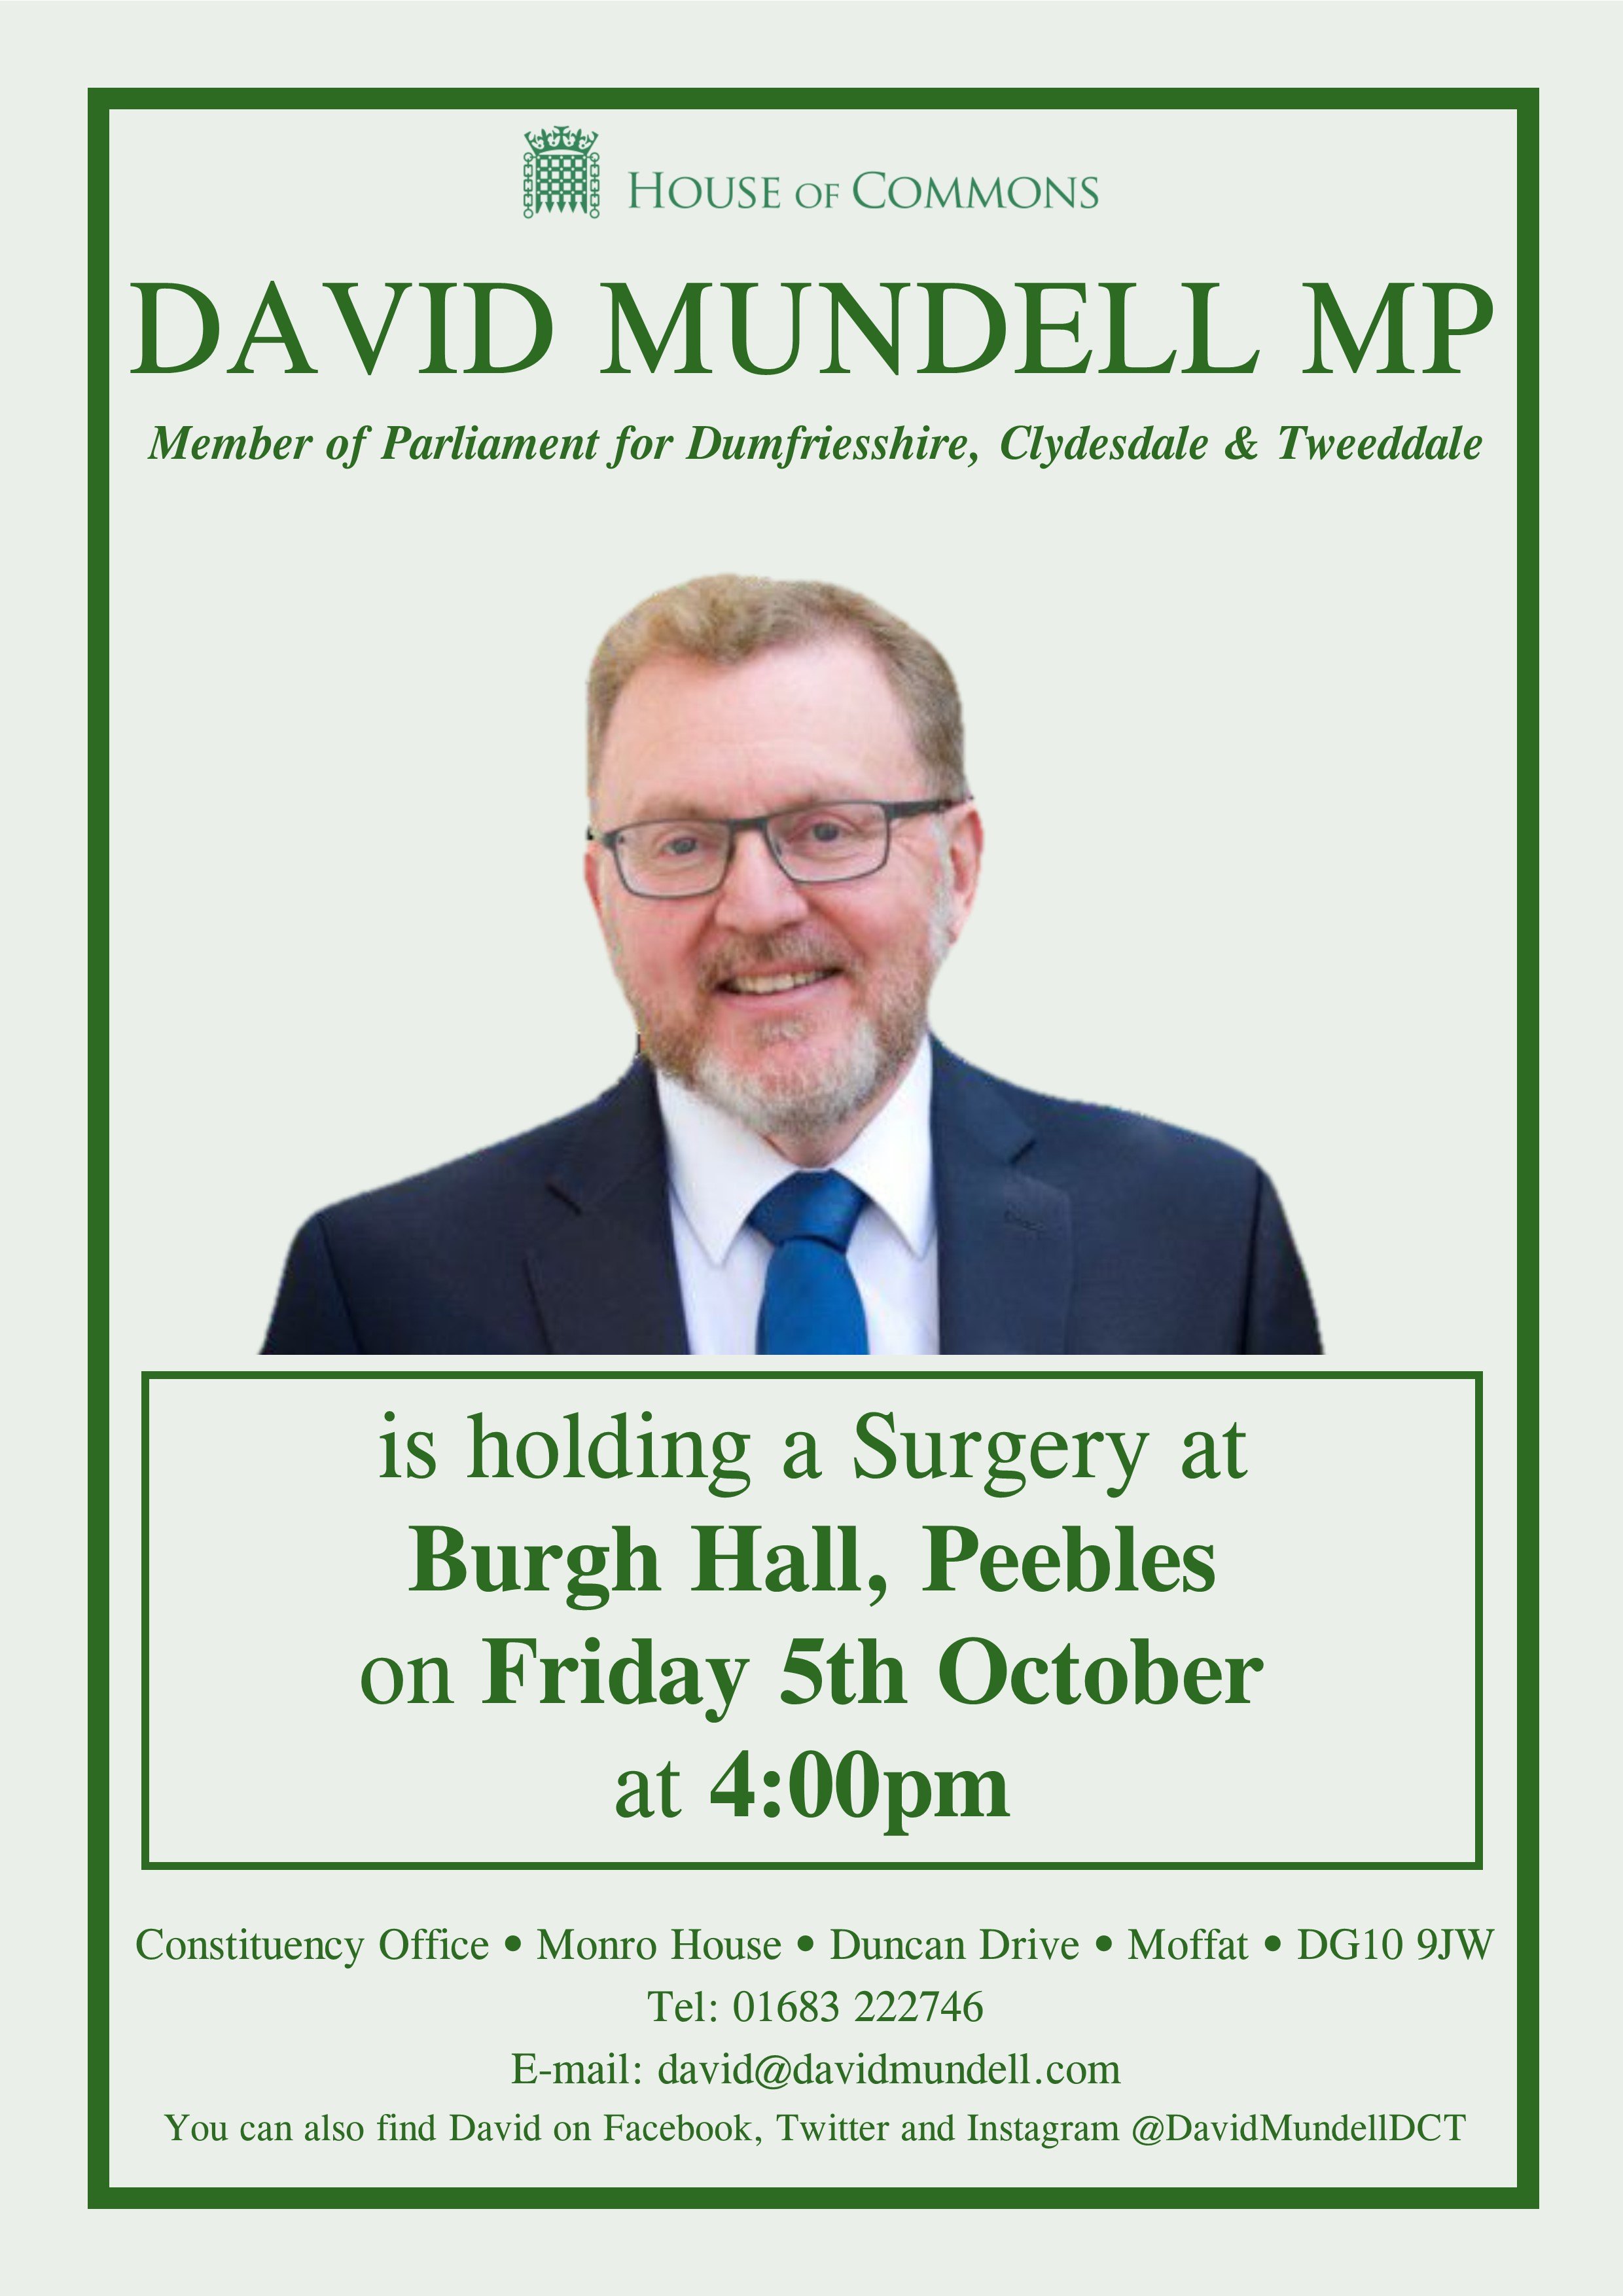 Peebles Burgh Hall Surgery 